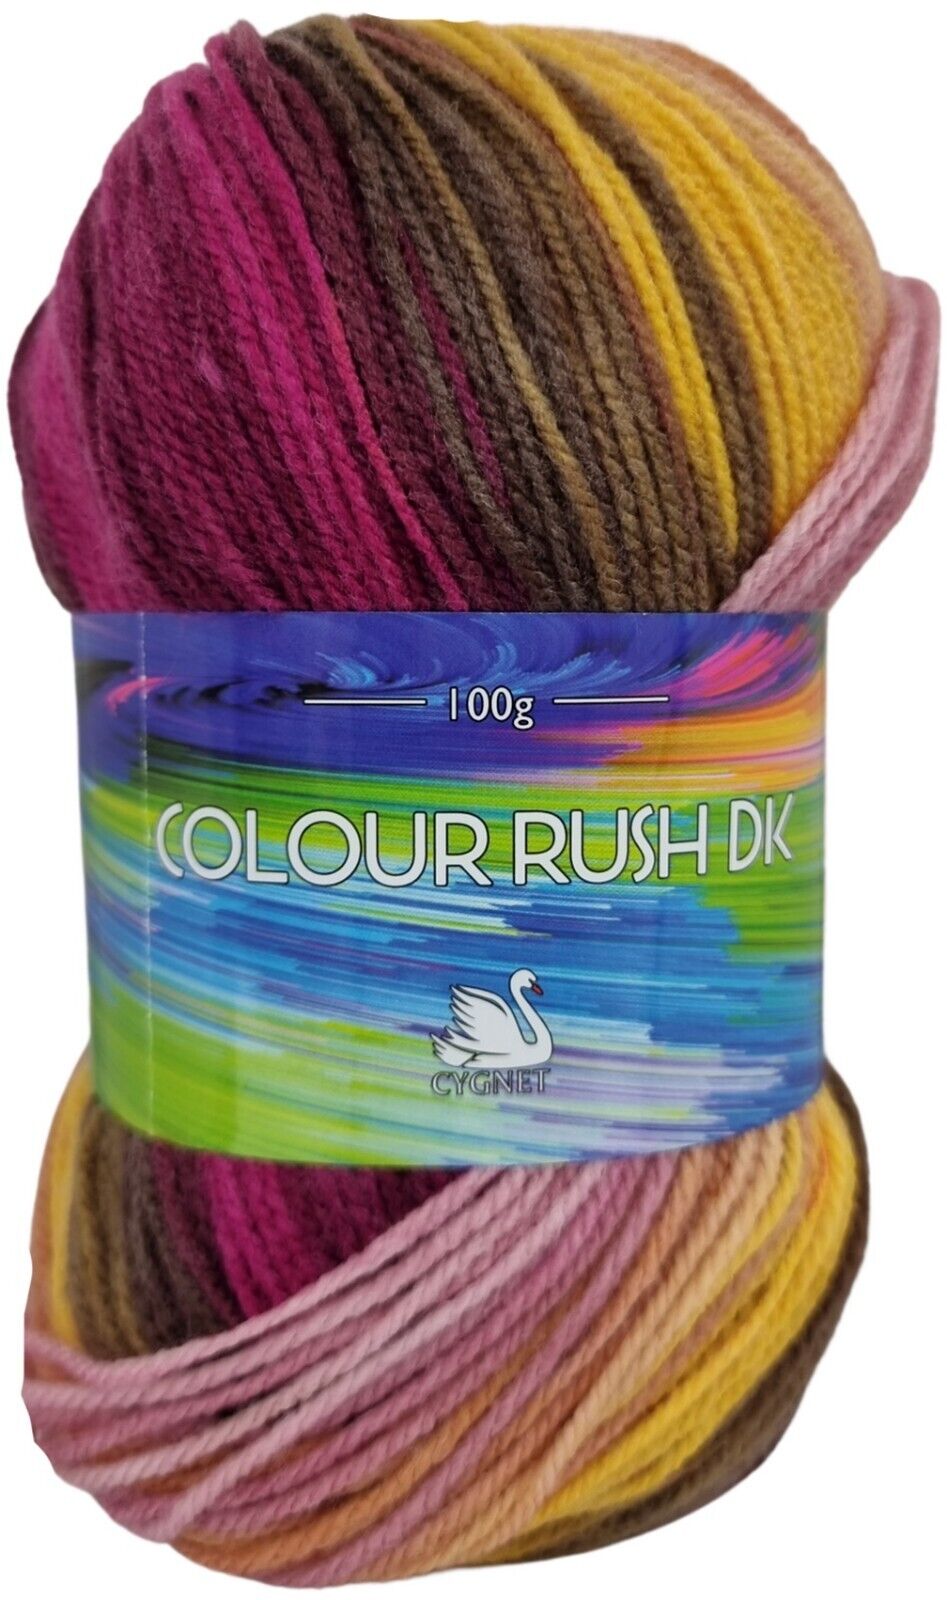 Cygnet COLOUR RUSH DK Knitting Yarn / Wool - 100g Double Knit Ball - Honeydew